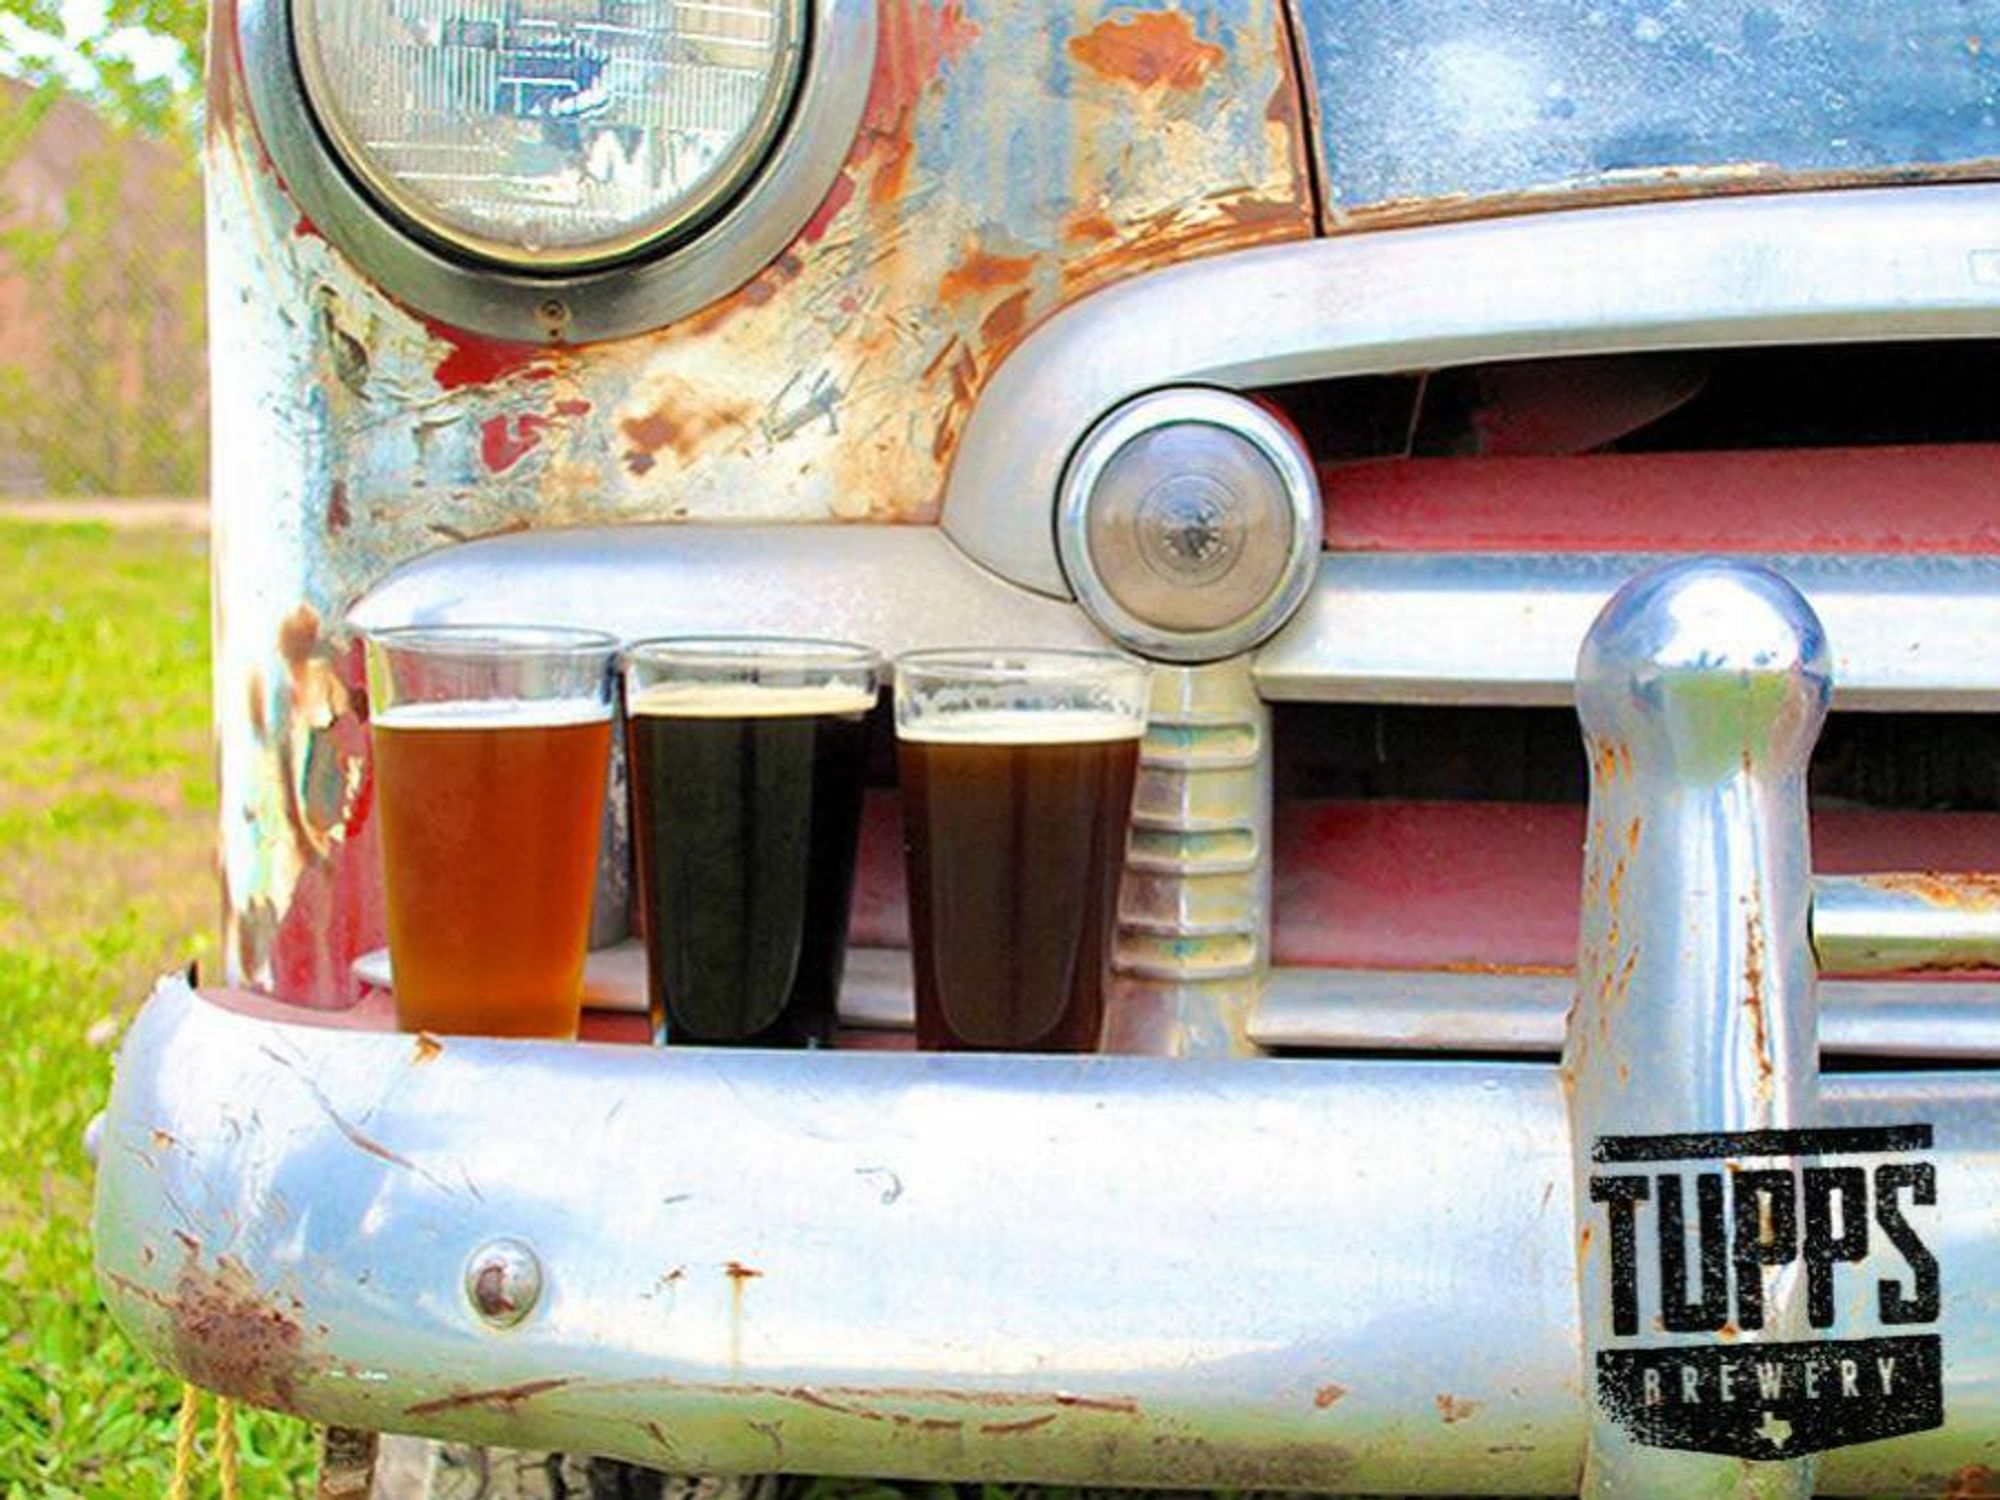 Grab a beer at Tupps Brewery.